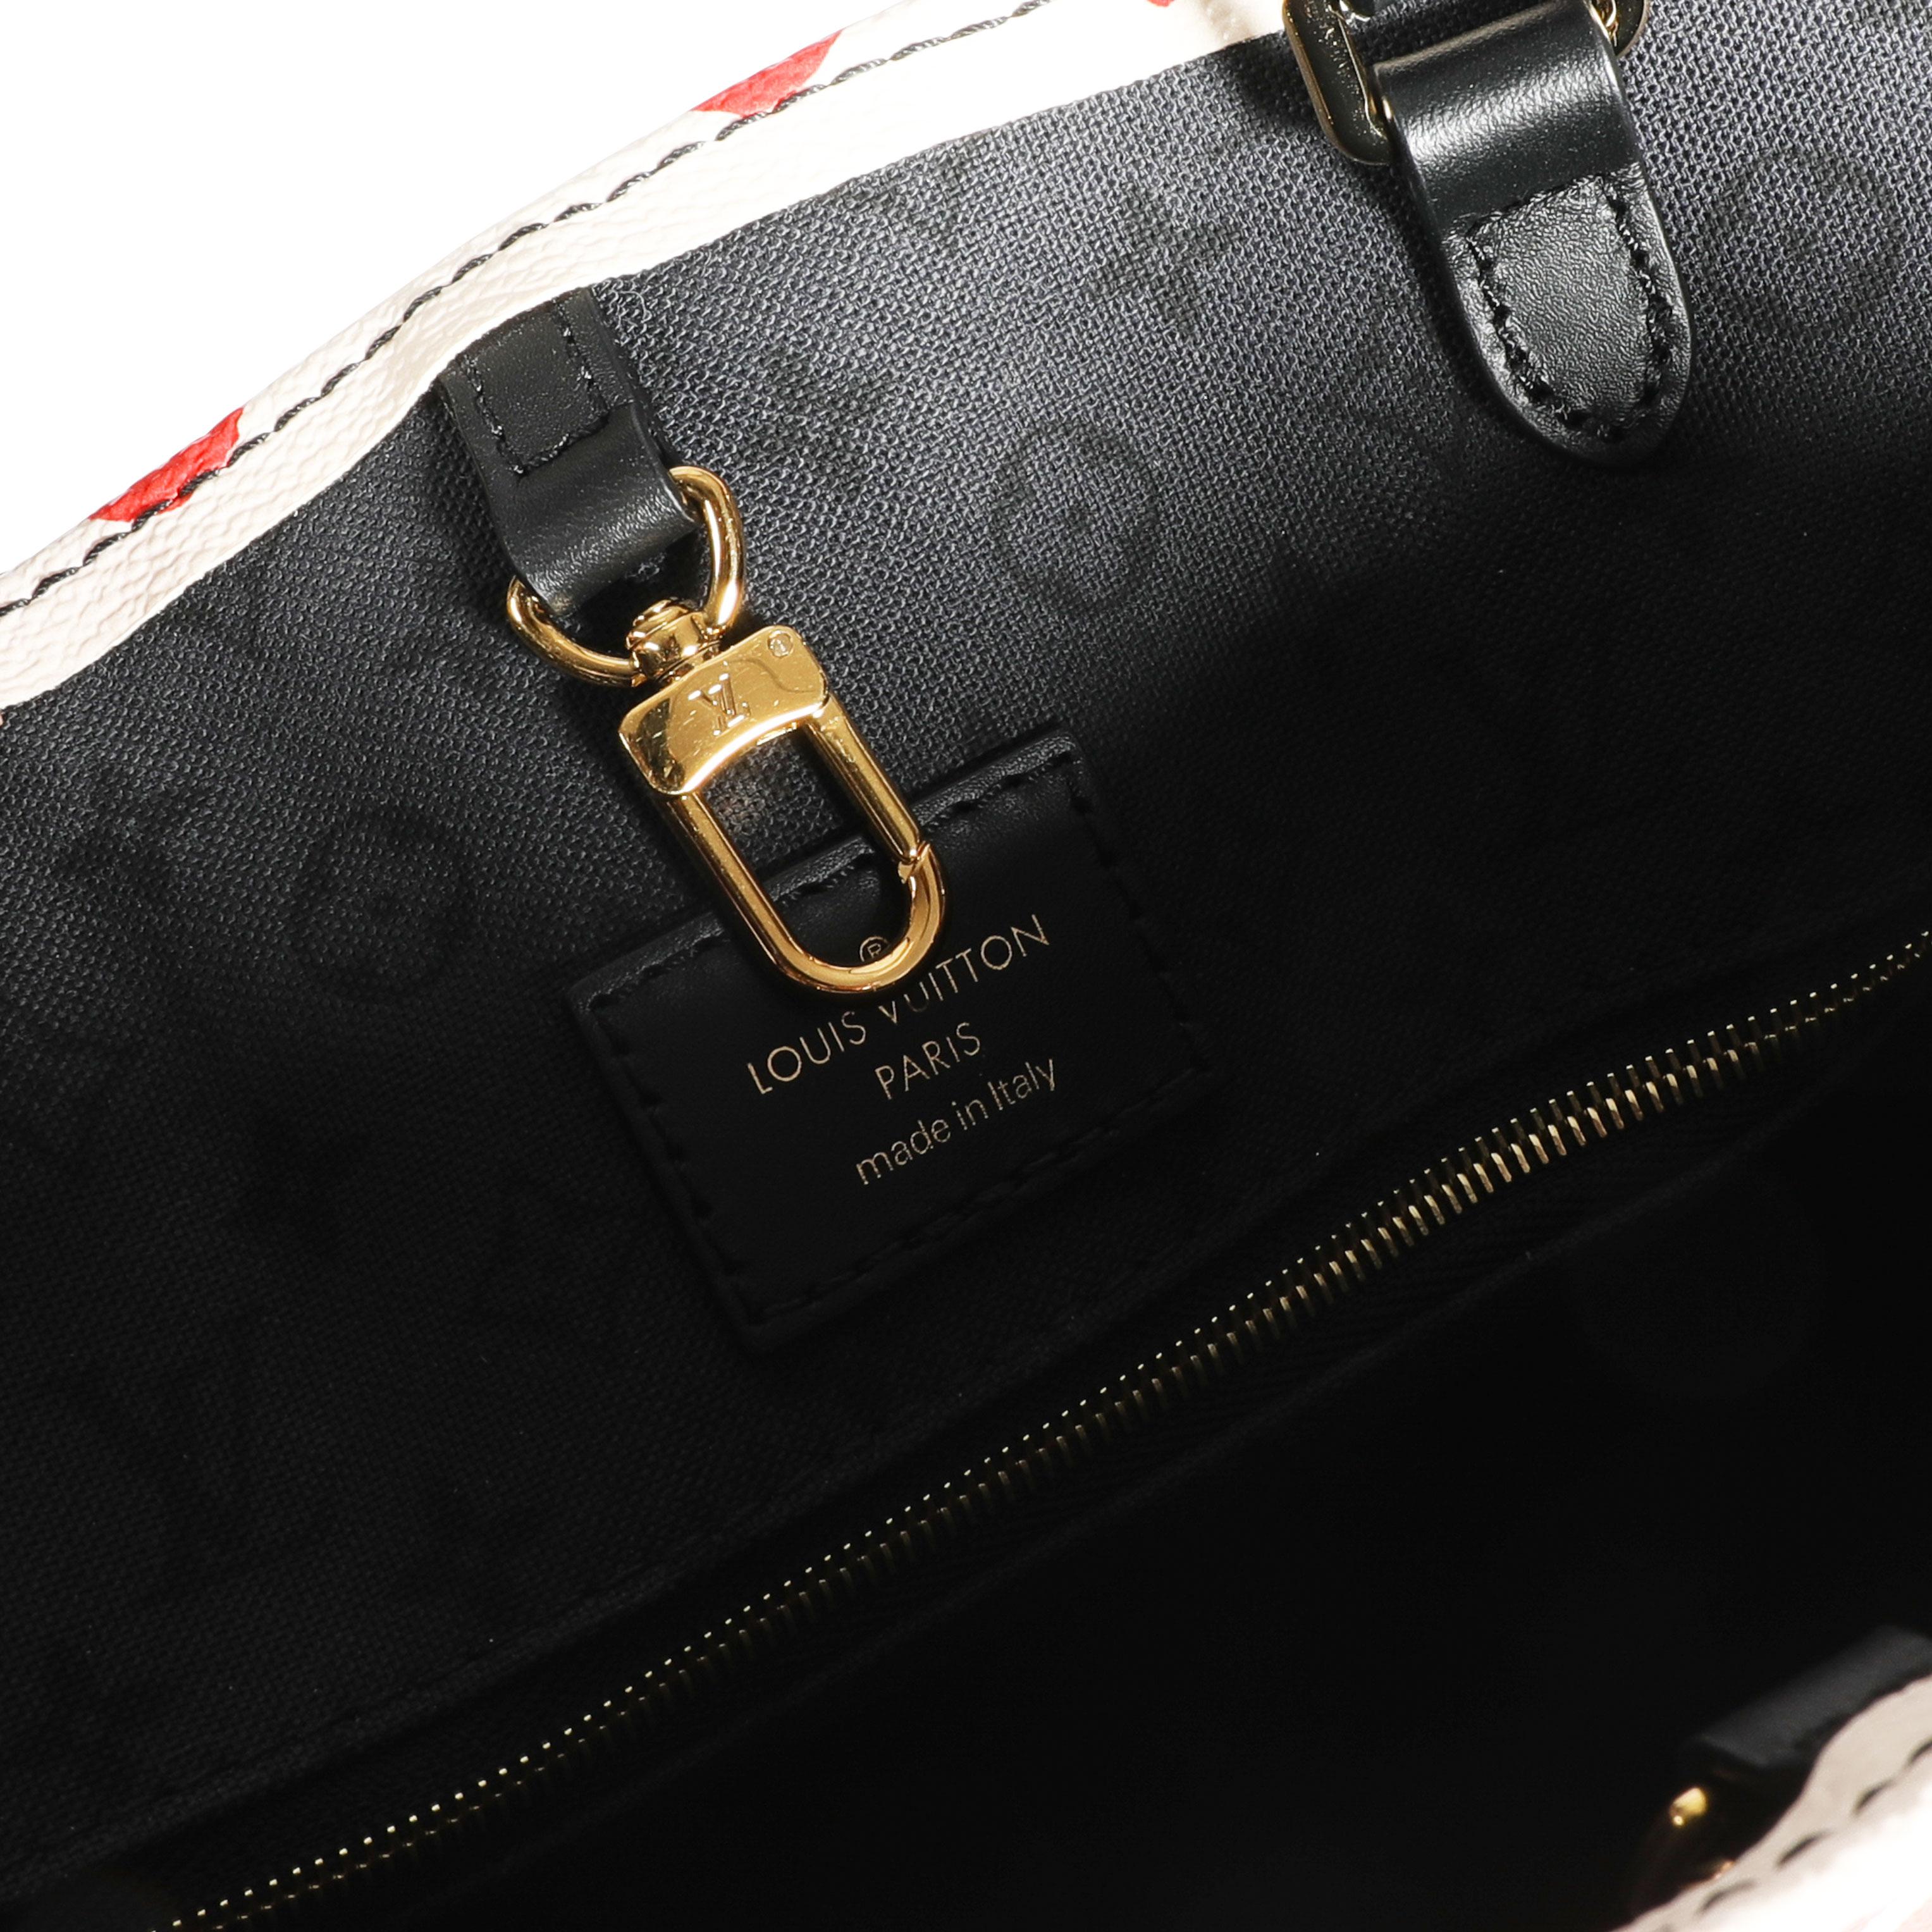 Louis Vuitton Cream & Red Monogram Giant LV Crafty Onthego GM
SKU: 110195

Handbag Condition: Excellent
Condition Comments: Excellent Condition. No visible signs of wear. 
Brand: Louis Vuitton
Model: Onthego
Ligne: LV Crafty
Origin Country: